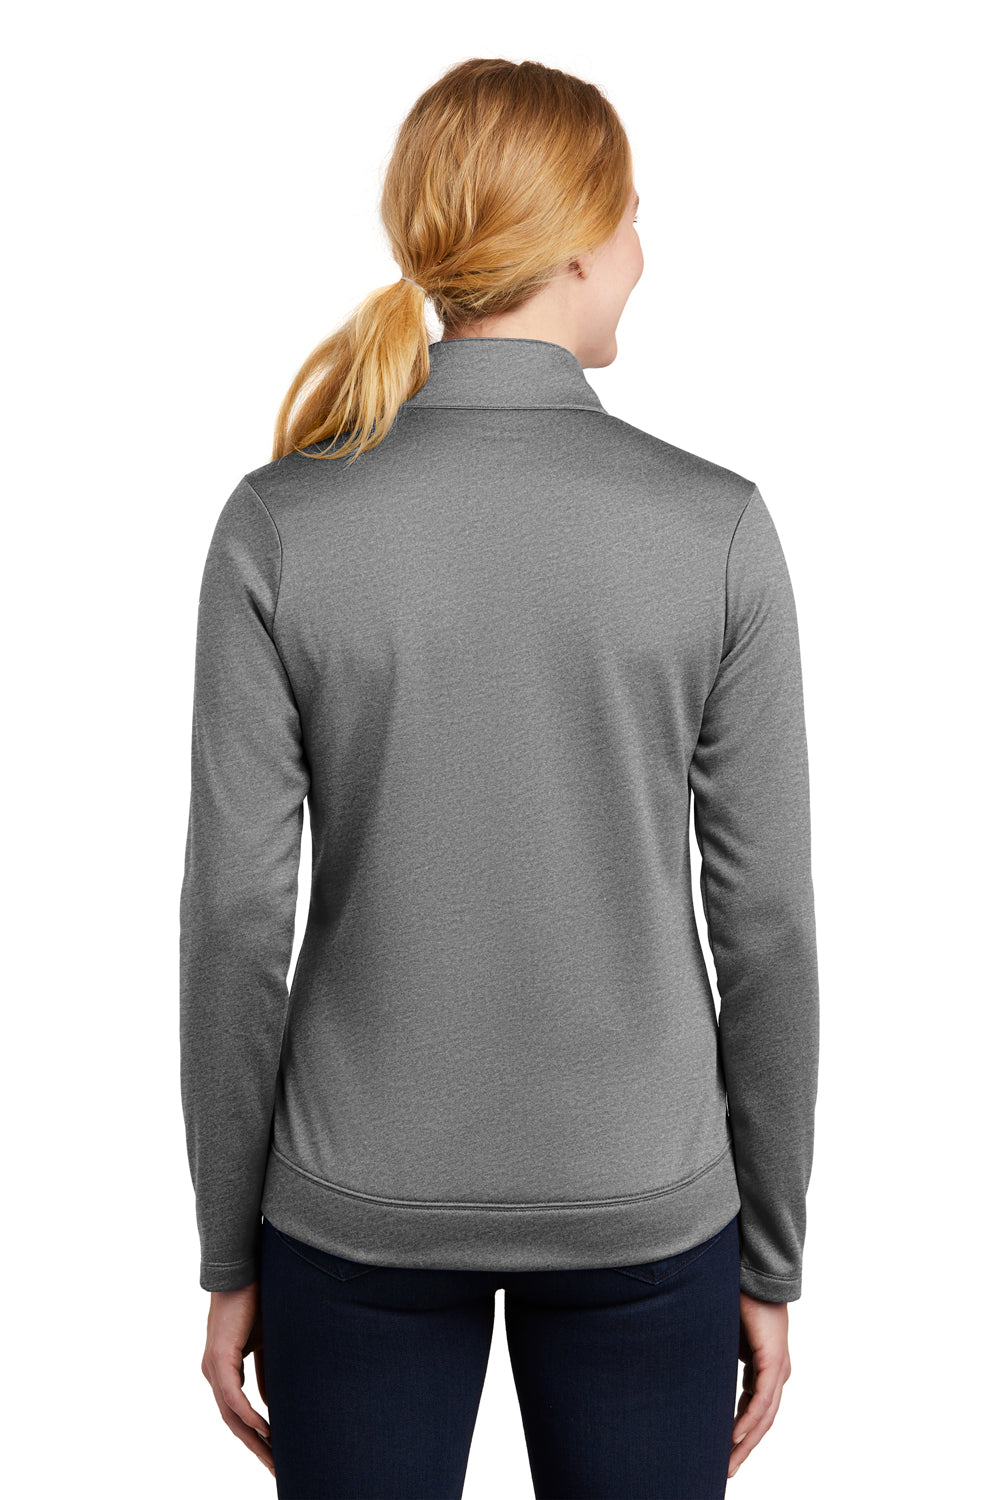 Nike NKAH6260 Womens Therma-Fit Moisture Wicking Fleece Full Zip Sweatshirt Heather Dark Grey Model Back